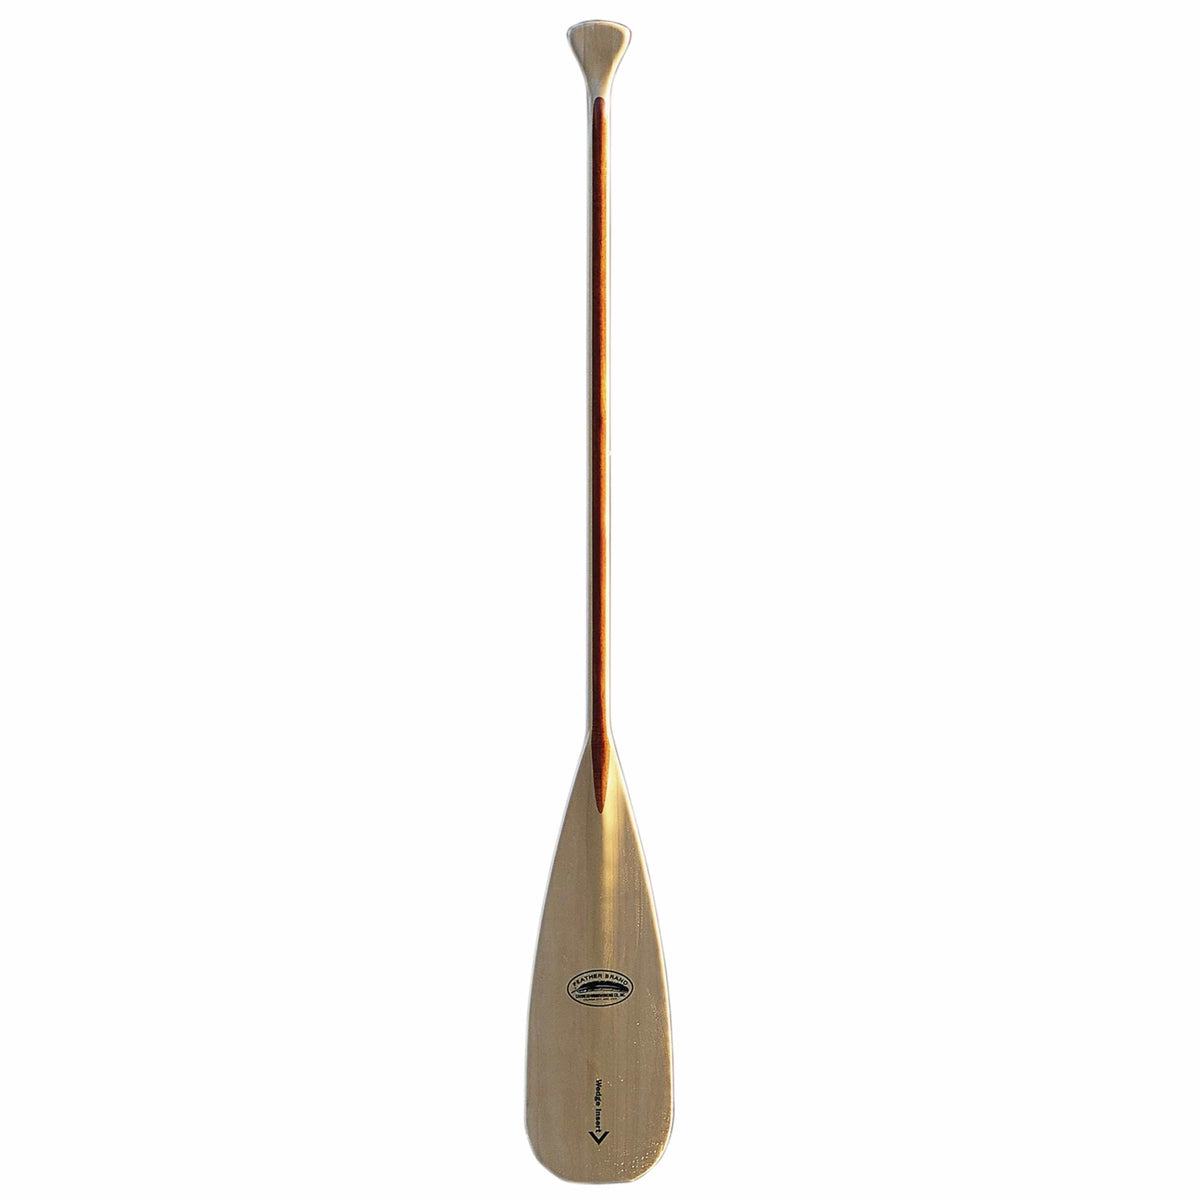 Caviness 800BL Beaver Tail Canoe Paddle Palm Grip 4.5' #845BL